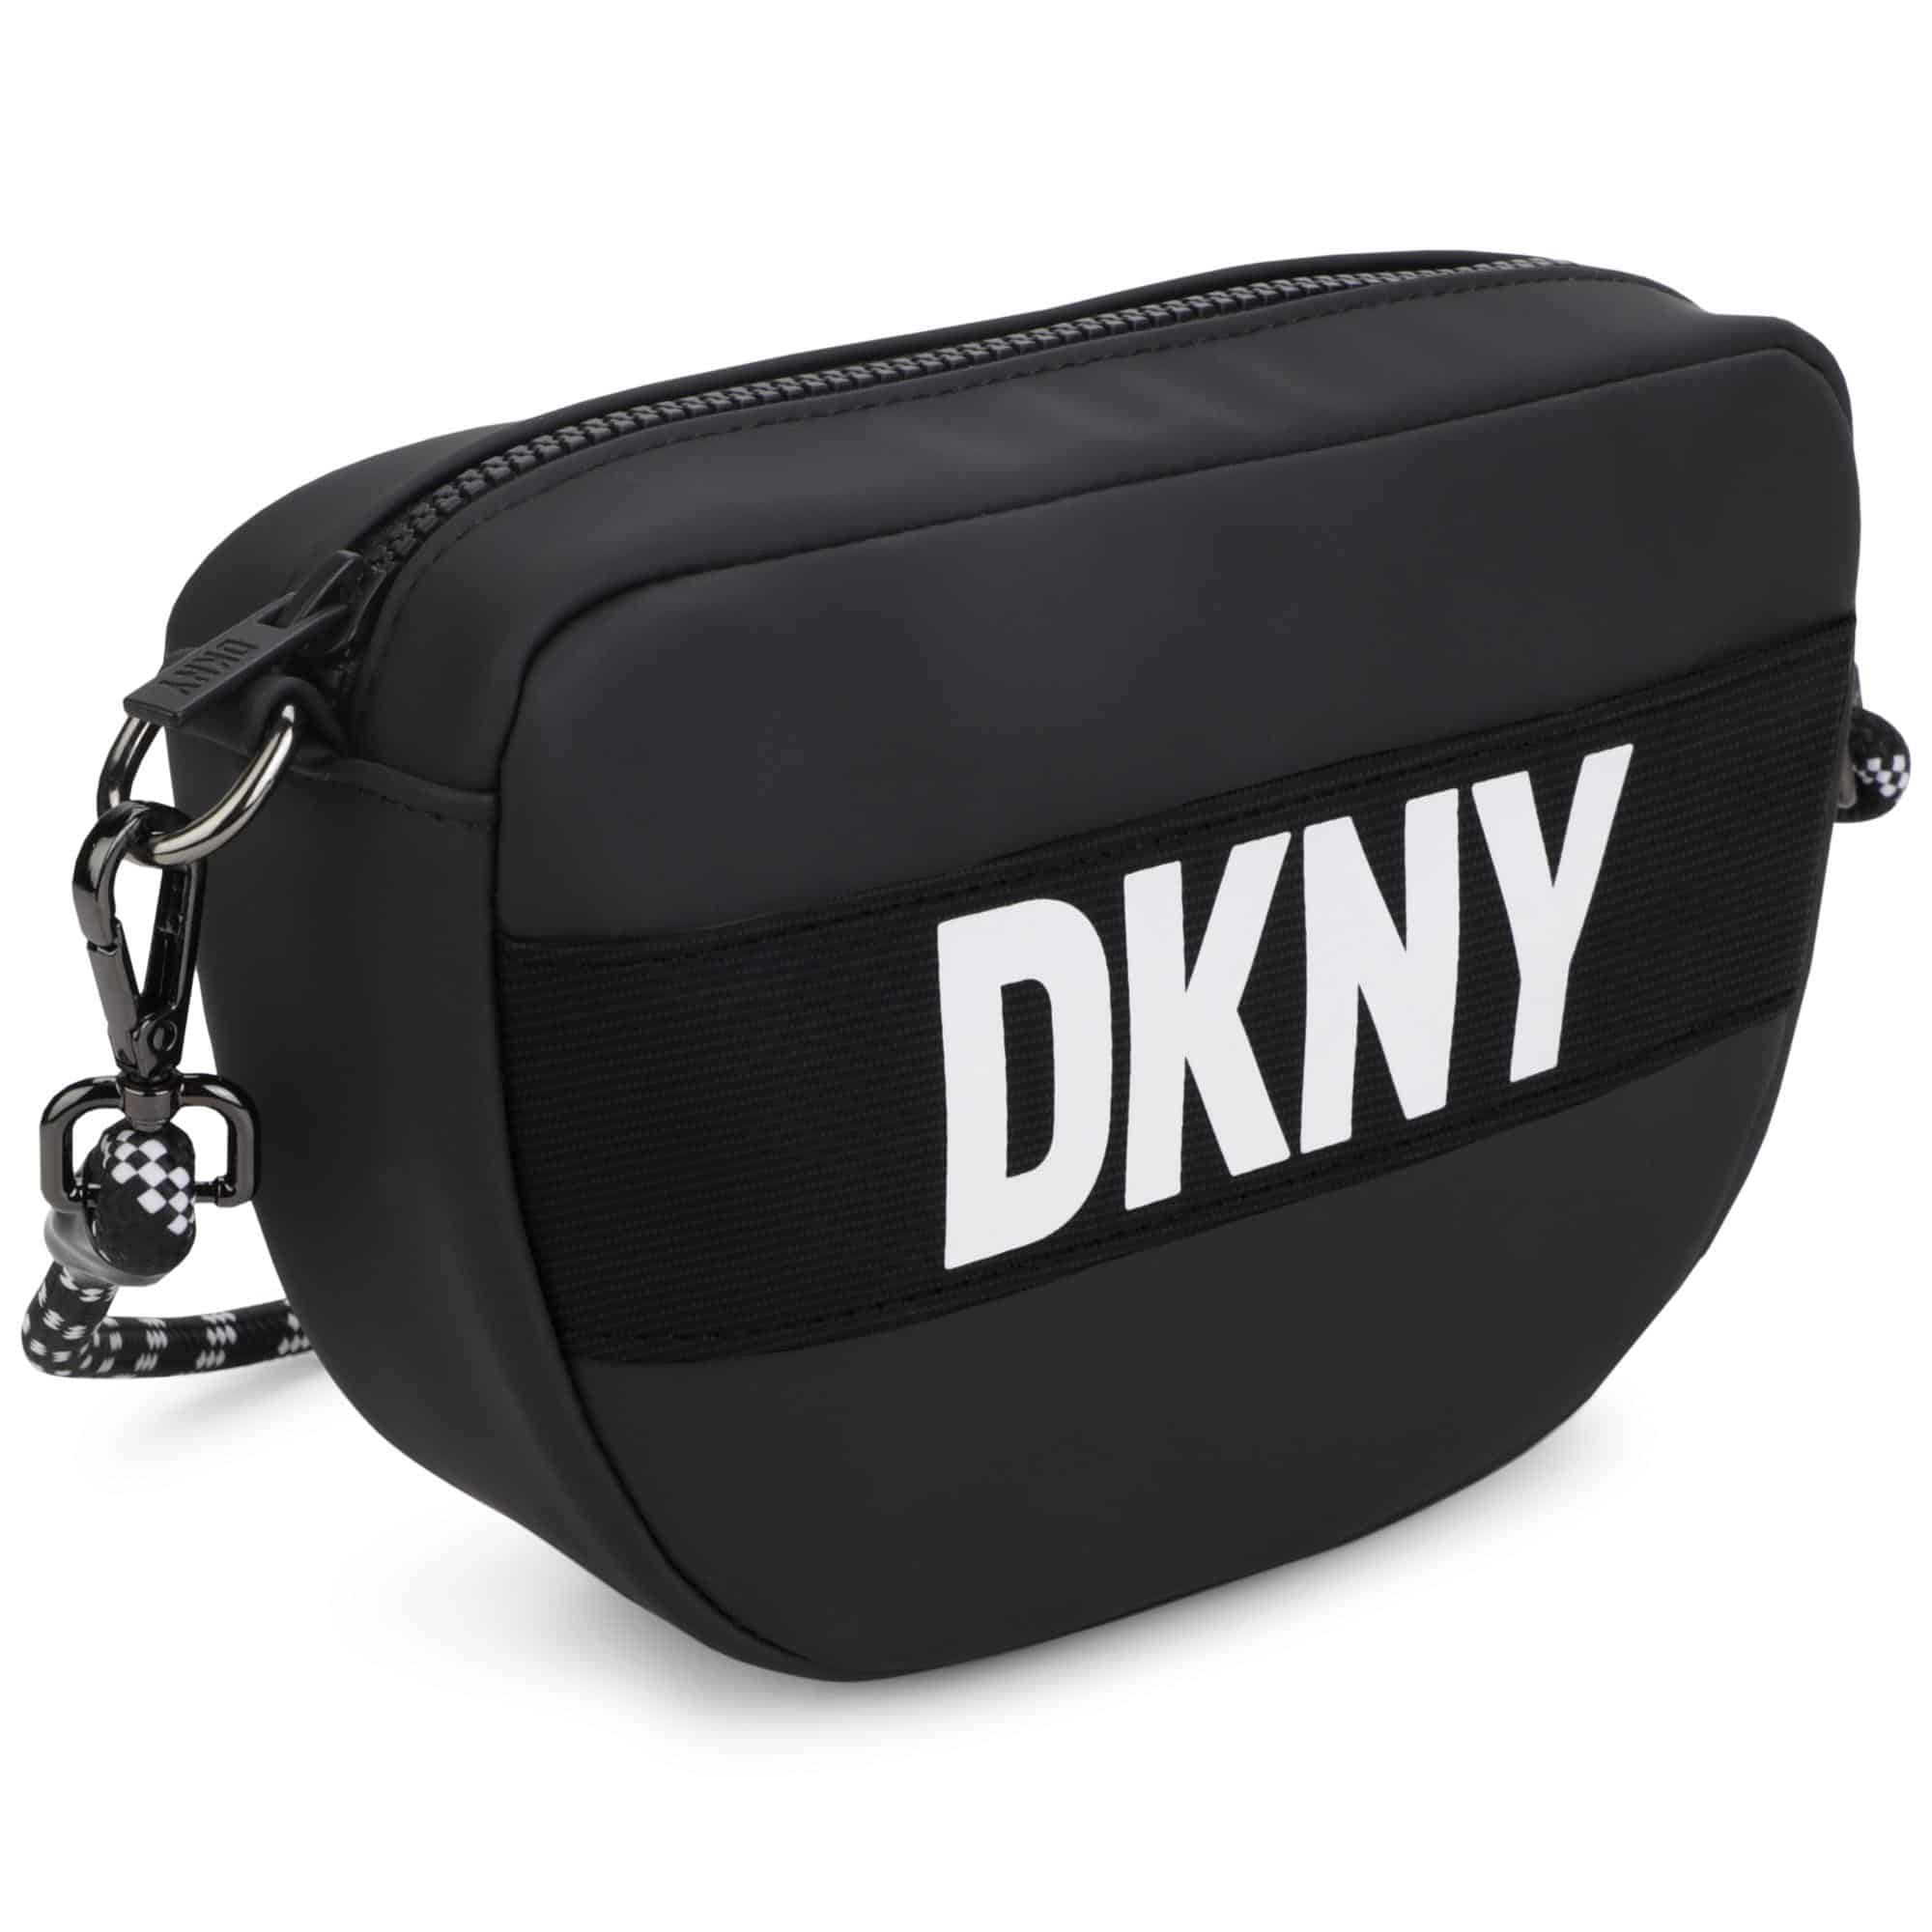 DKNY girls black crossbody bag with white logo